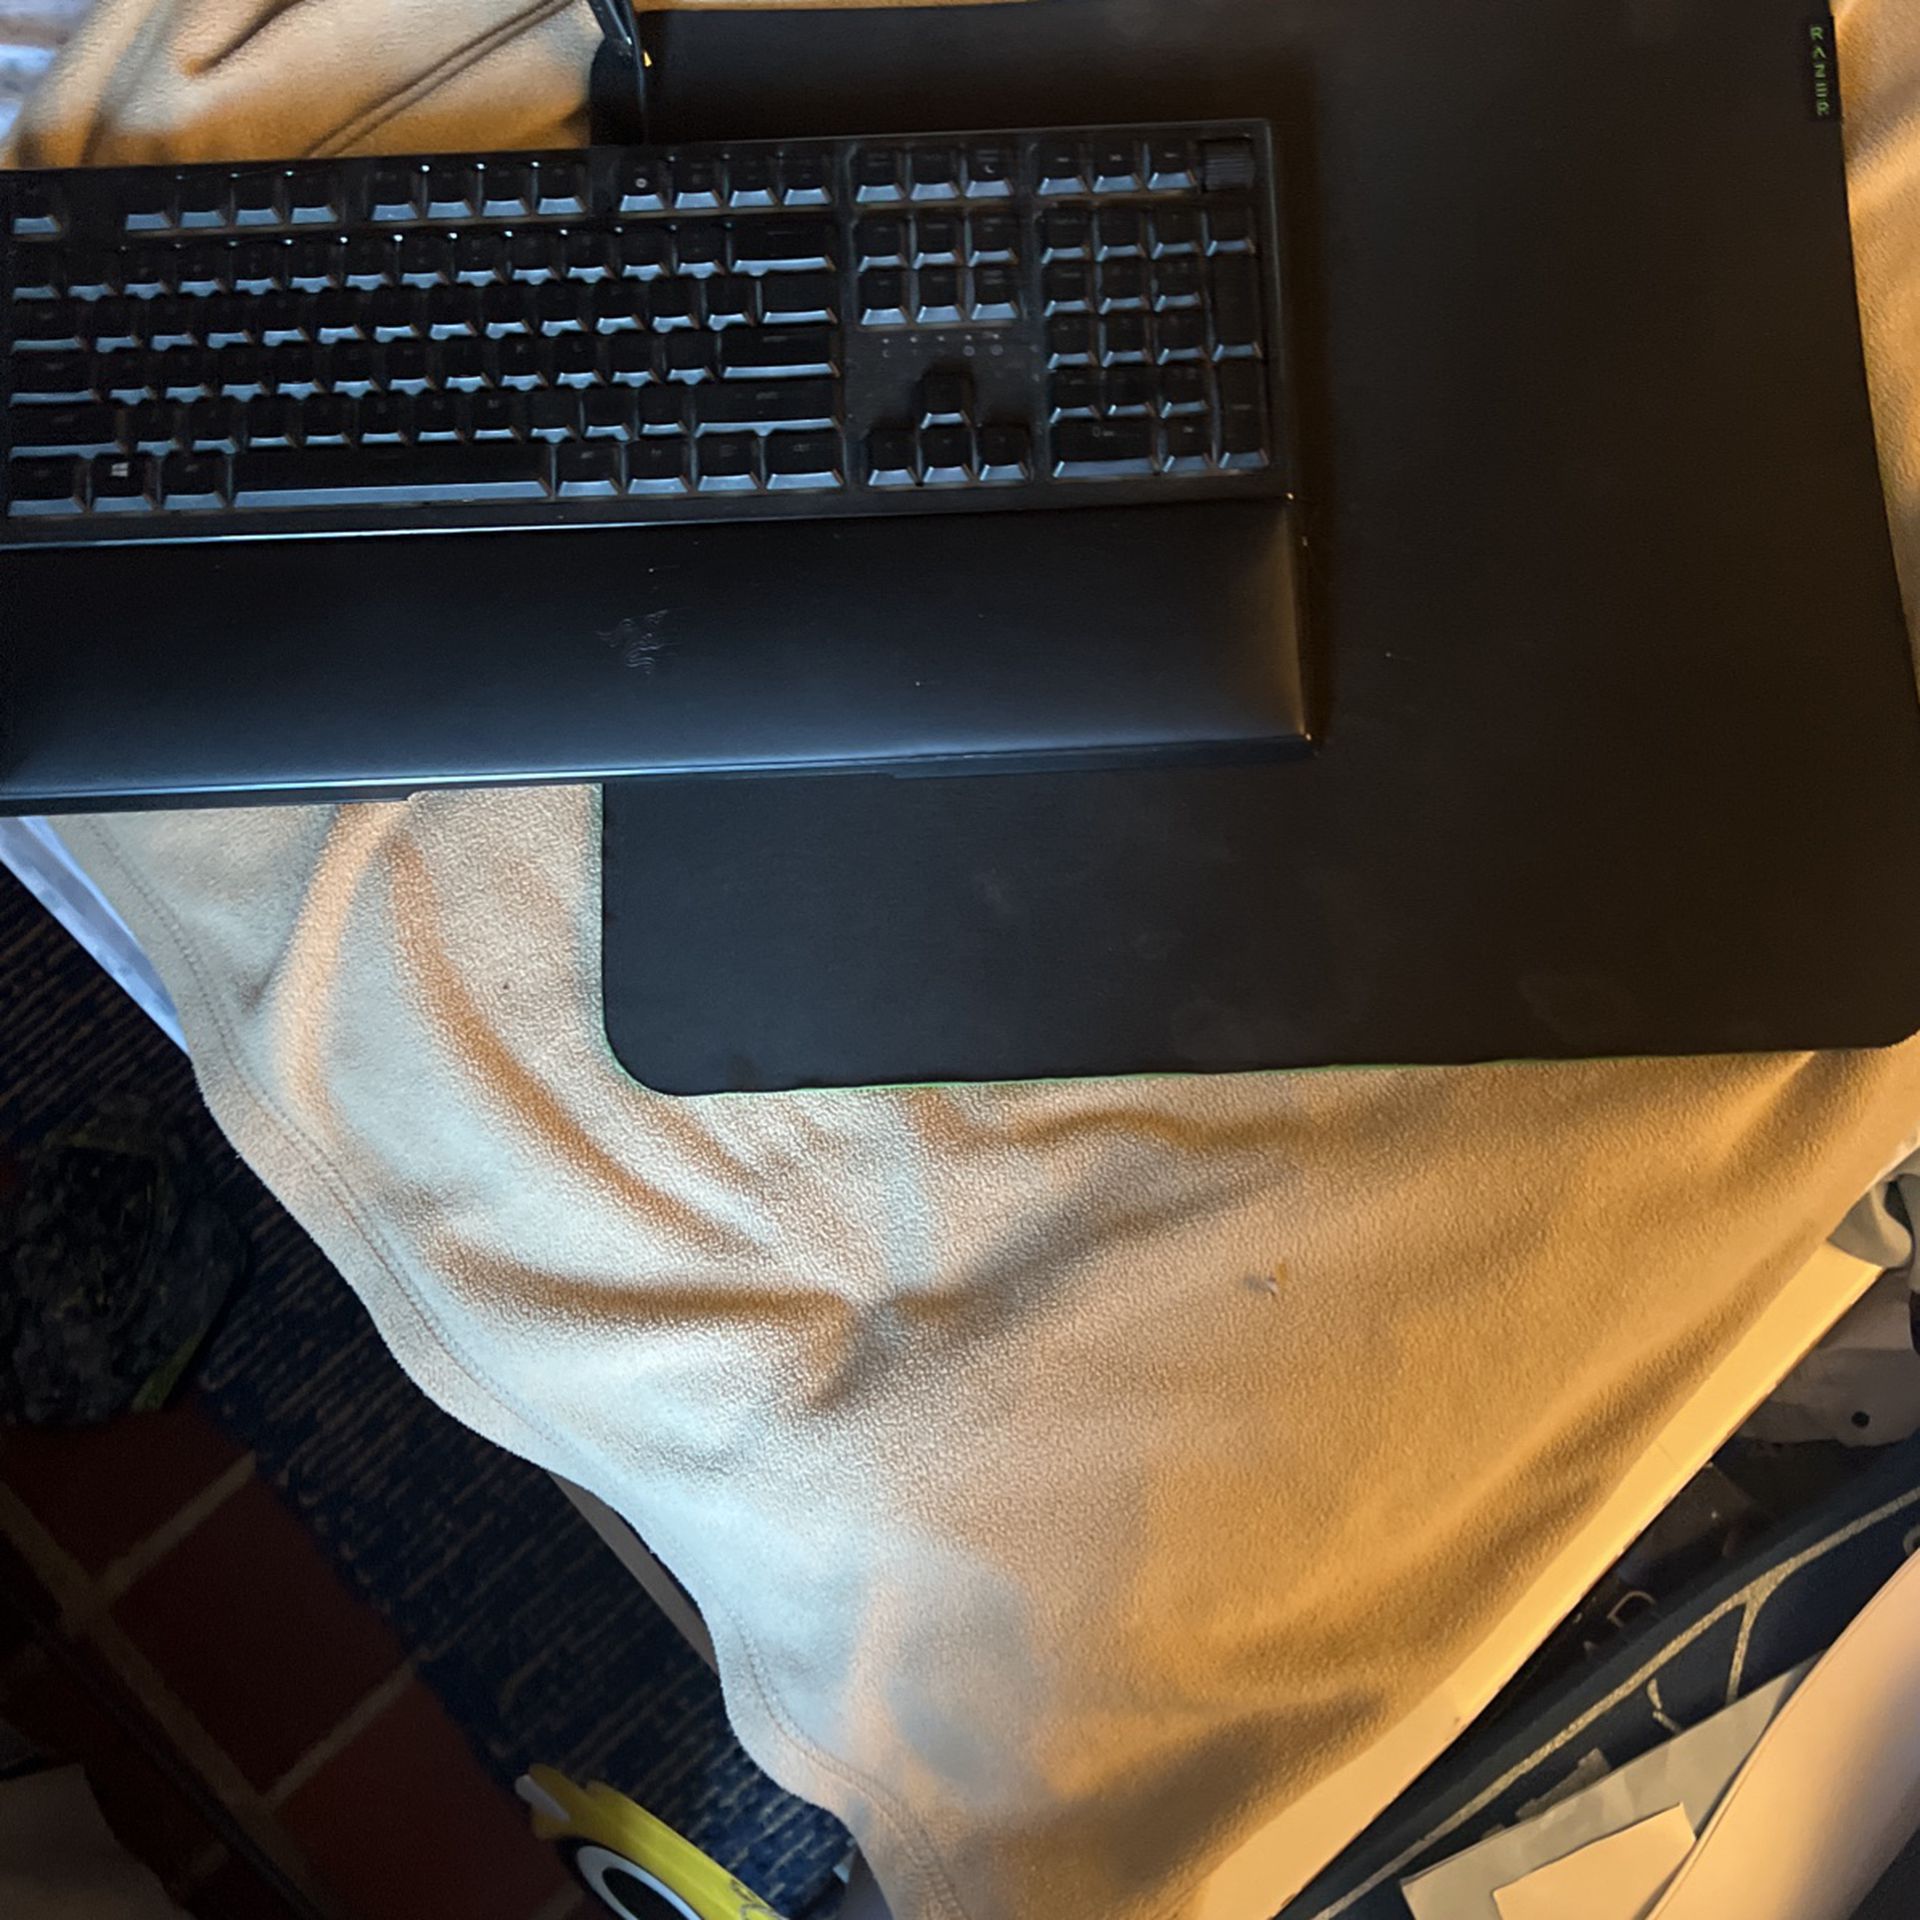 Razer Ornata V2 Gaming Keyboard, Mouse Pad And Wrist Rest